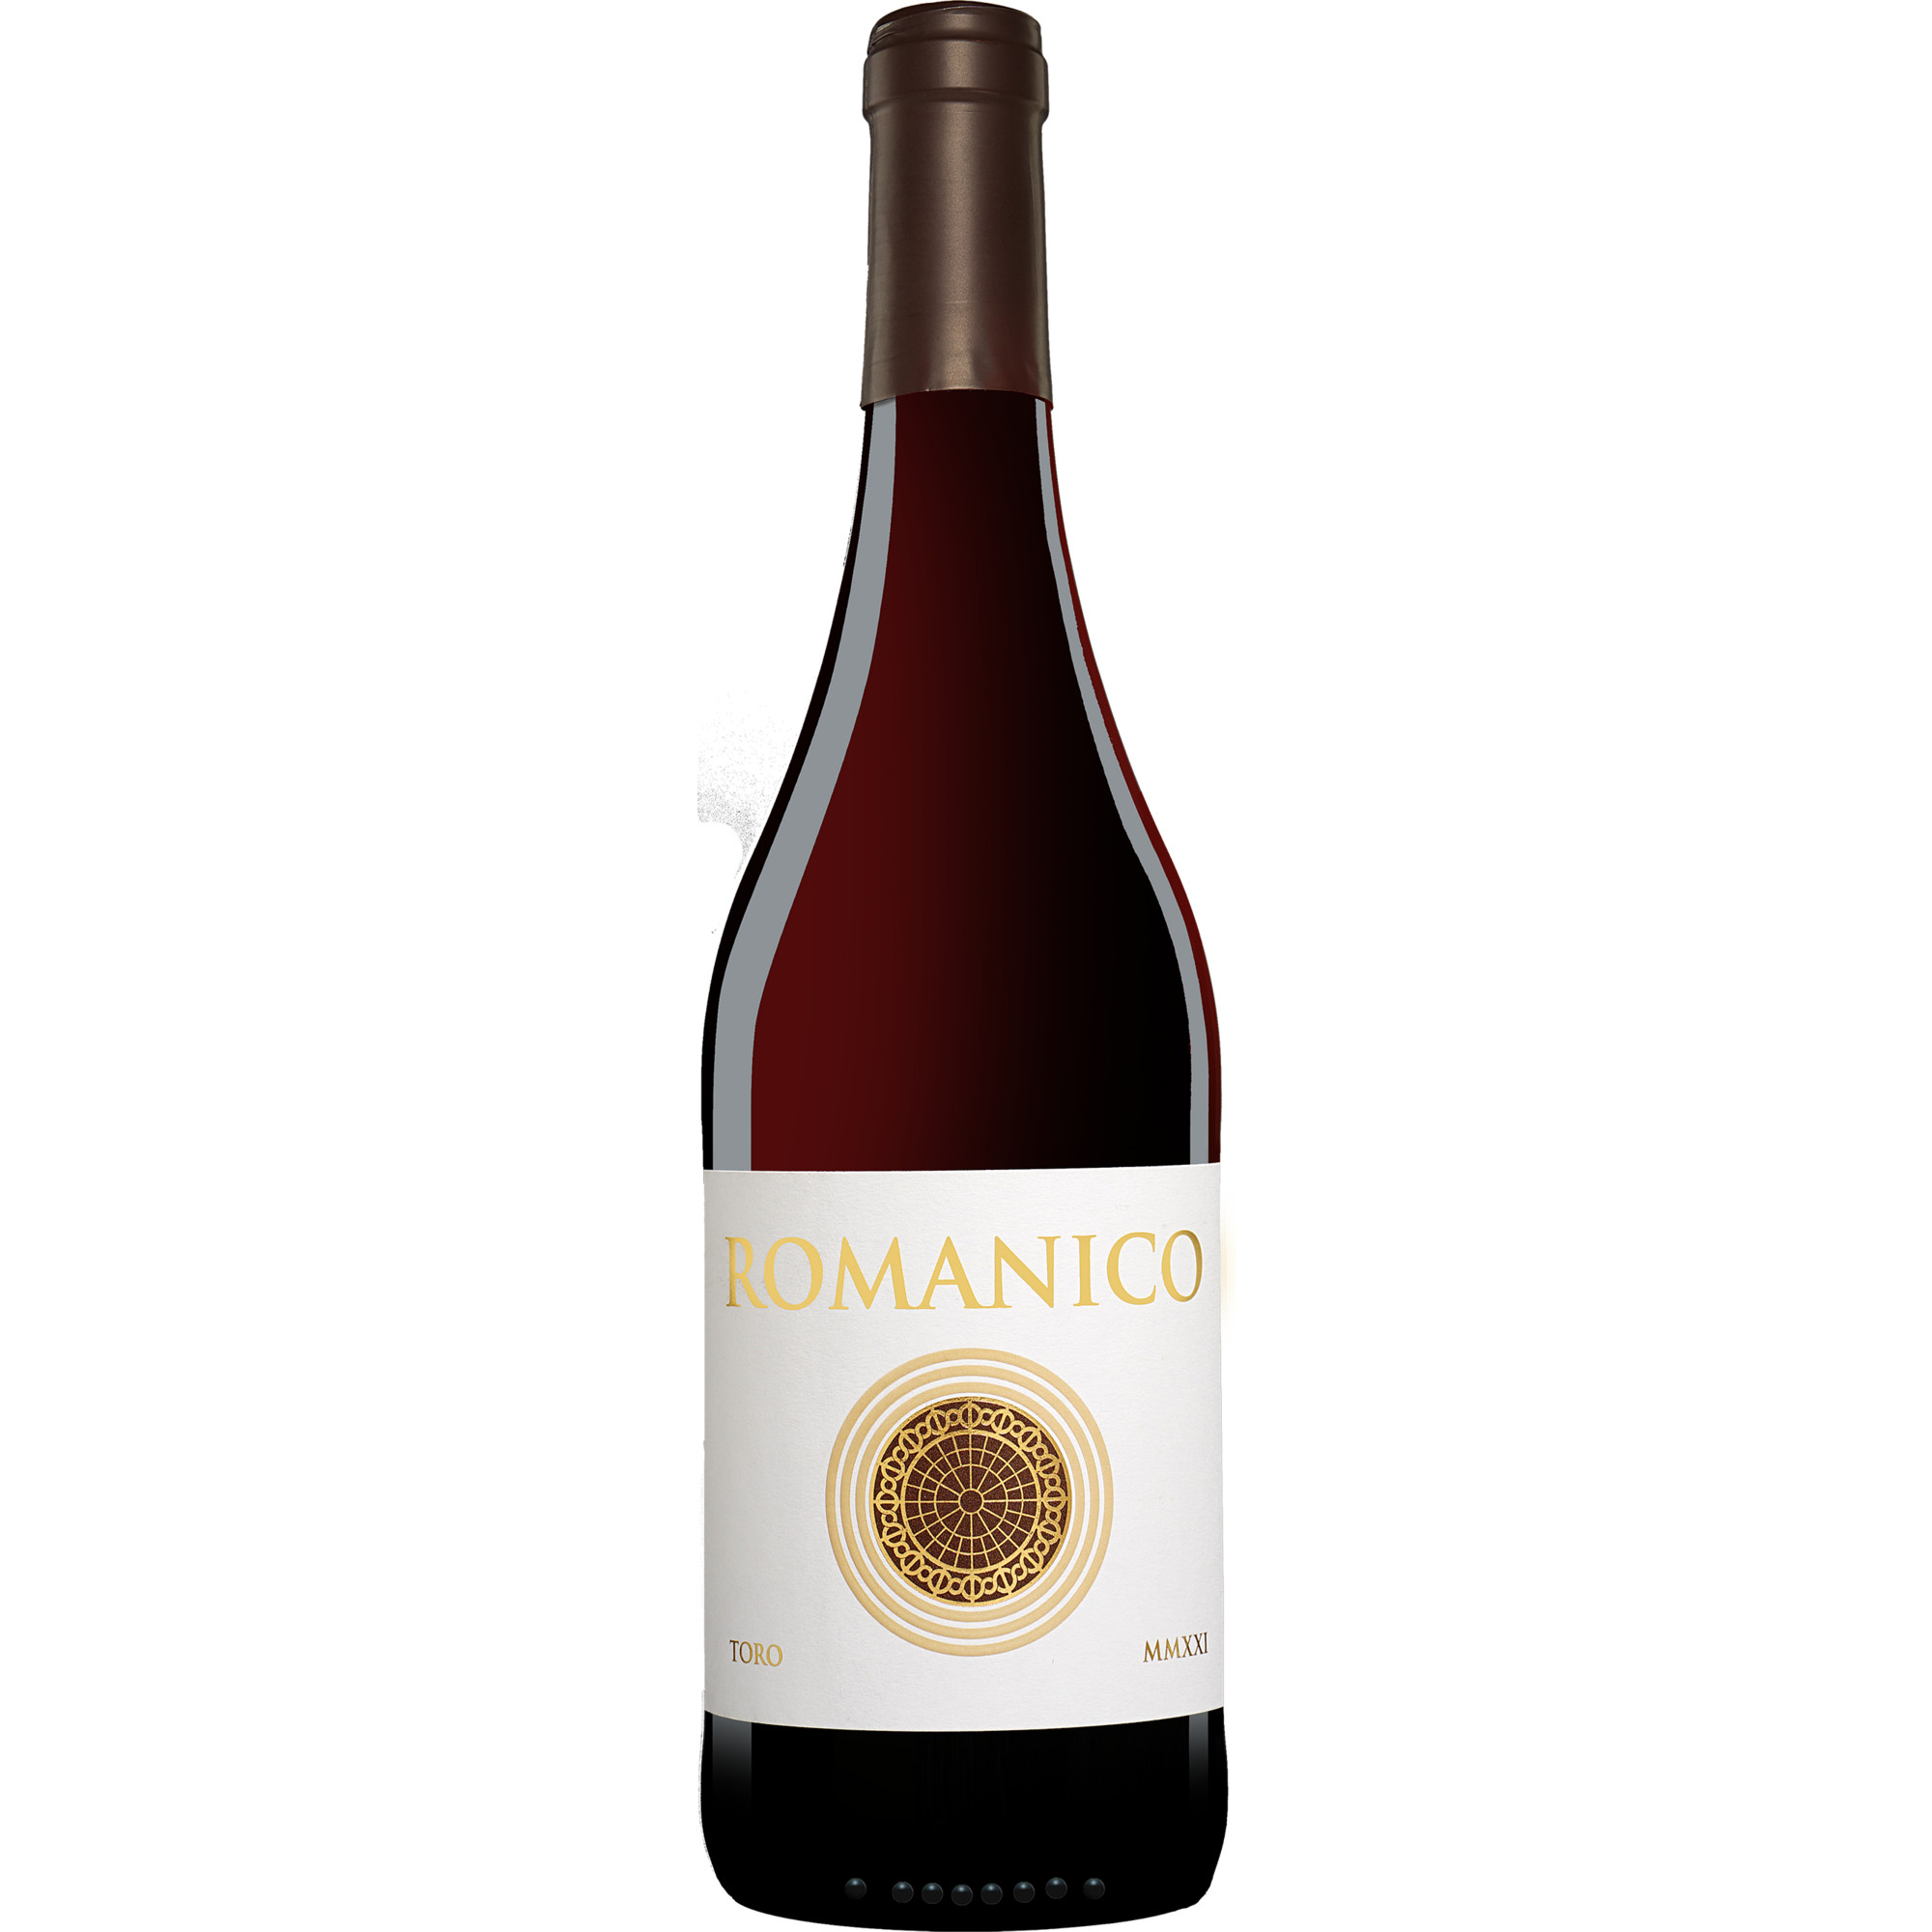 Teso La Monja »Romanico« 2021  014.5% Vol. Rotwein Trocken aus Spanien